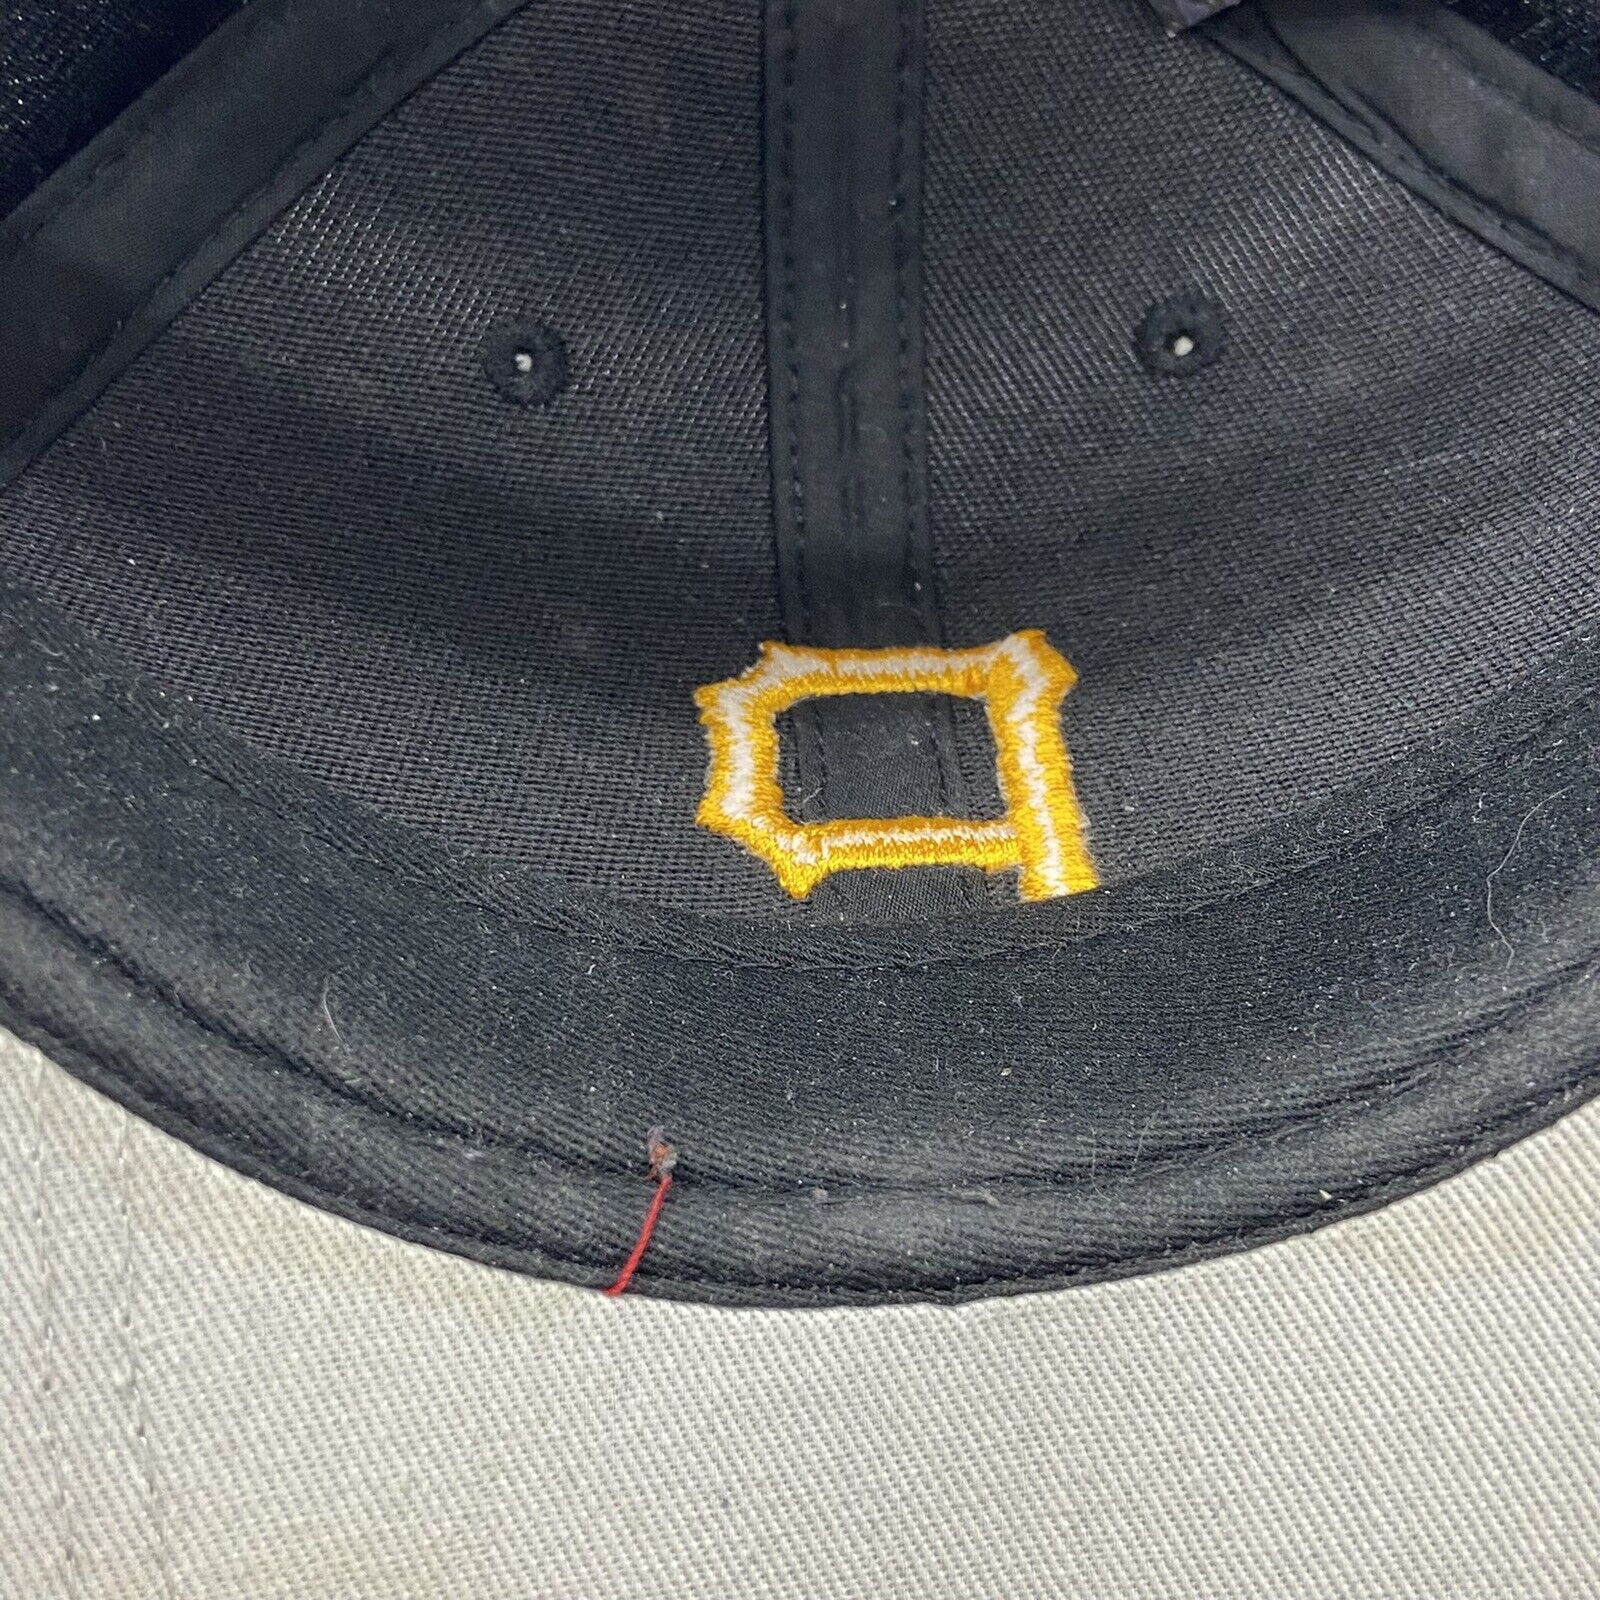 47 Brand Pittsburgh Pirates MLB Black Snap Back Hat Cap Adult One Size -  beyond exchange